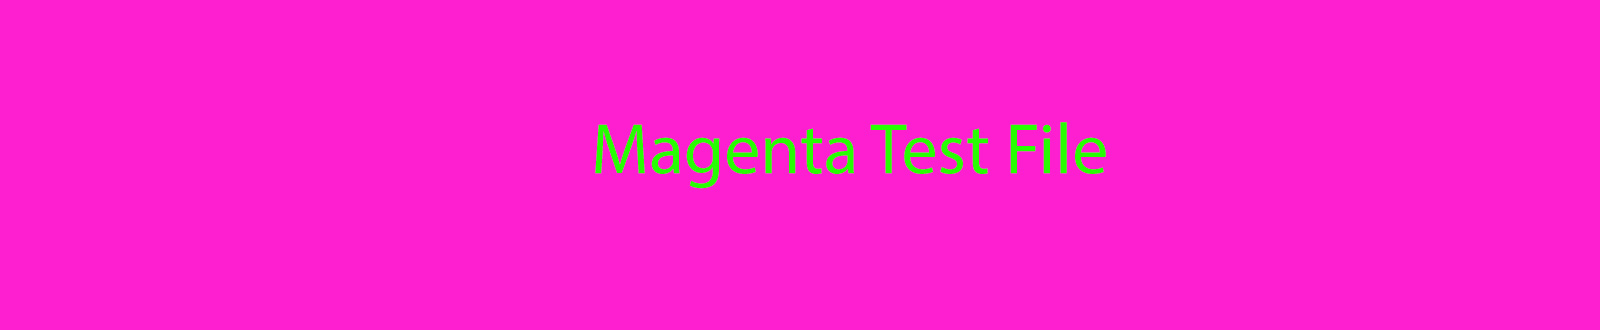 Magenta Test Image